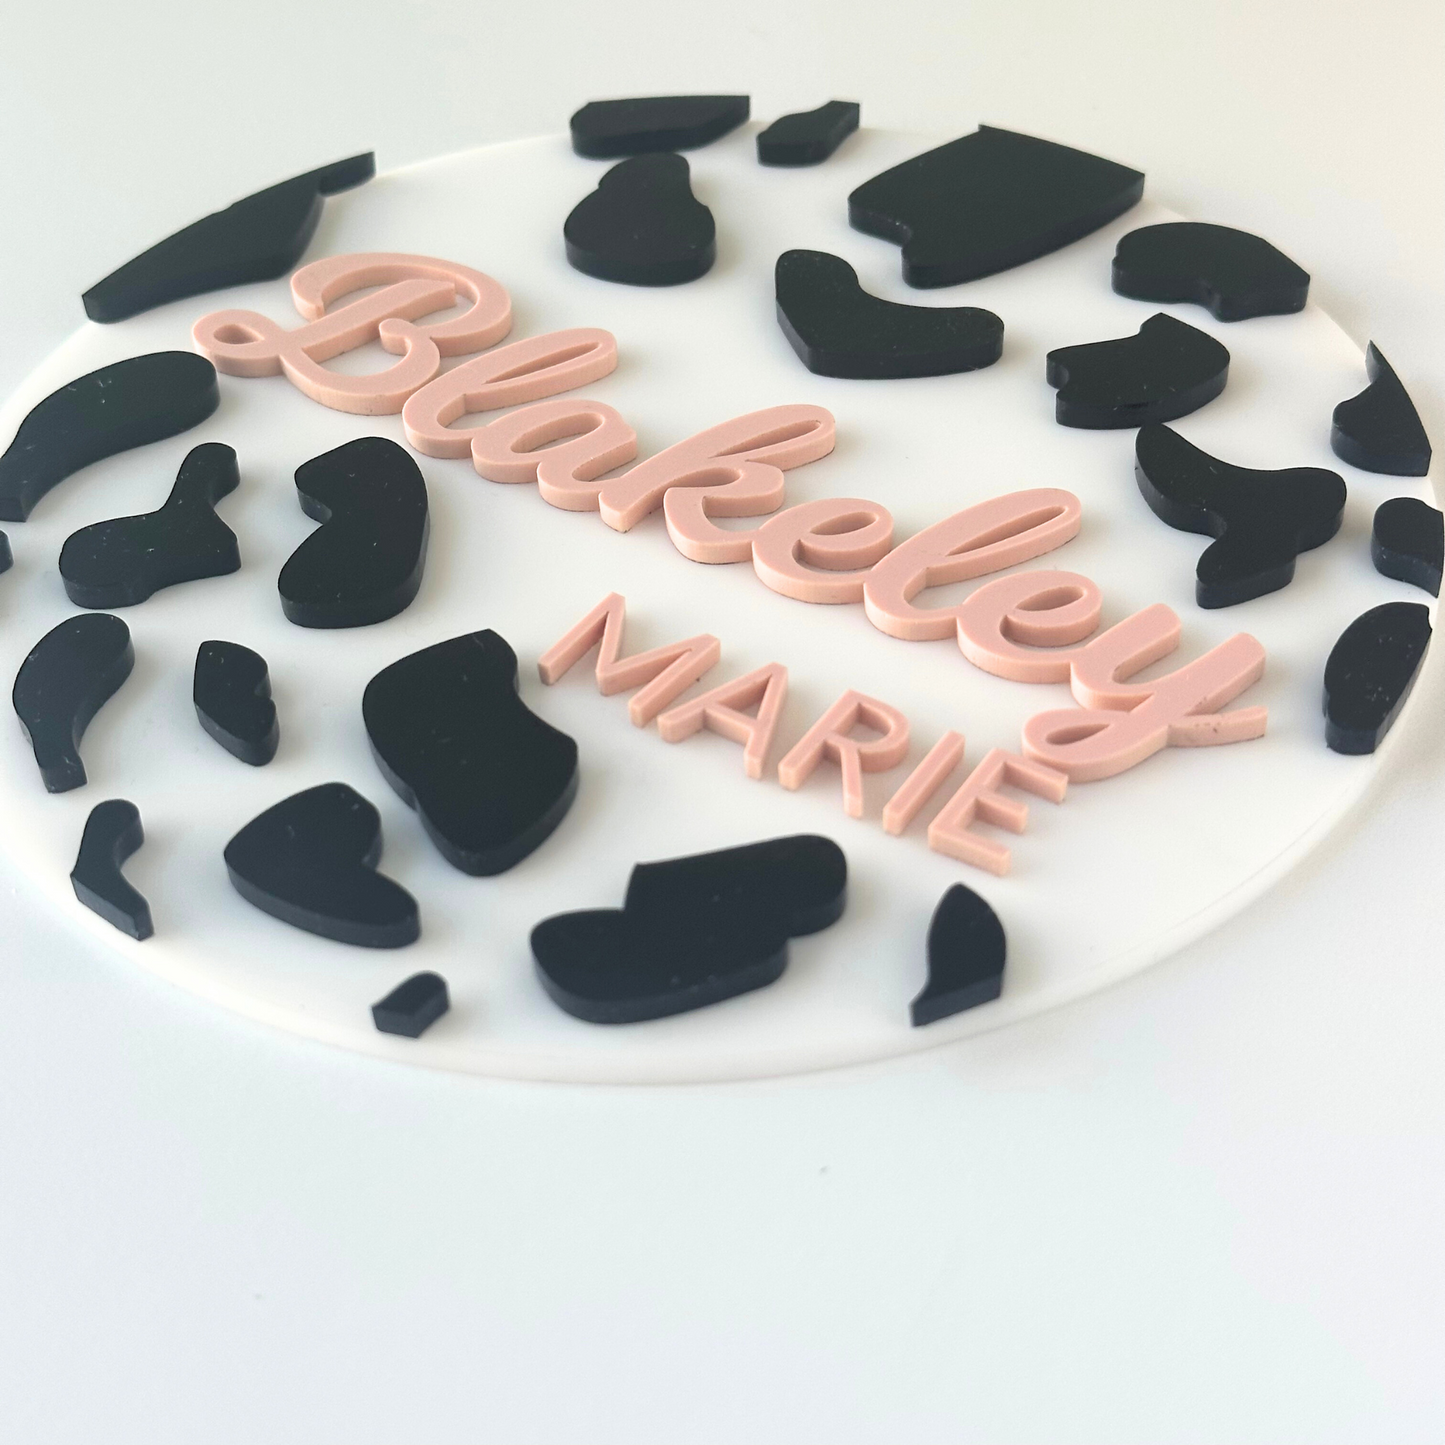 Cow Print Acrylic Name Sign